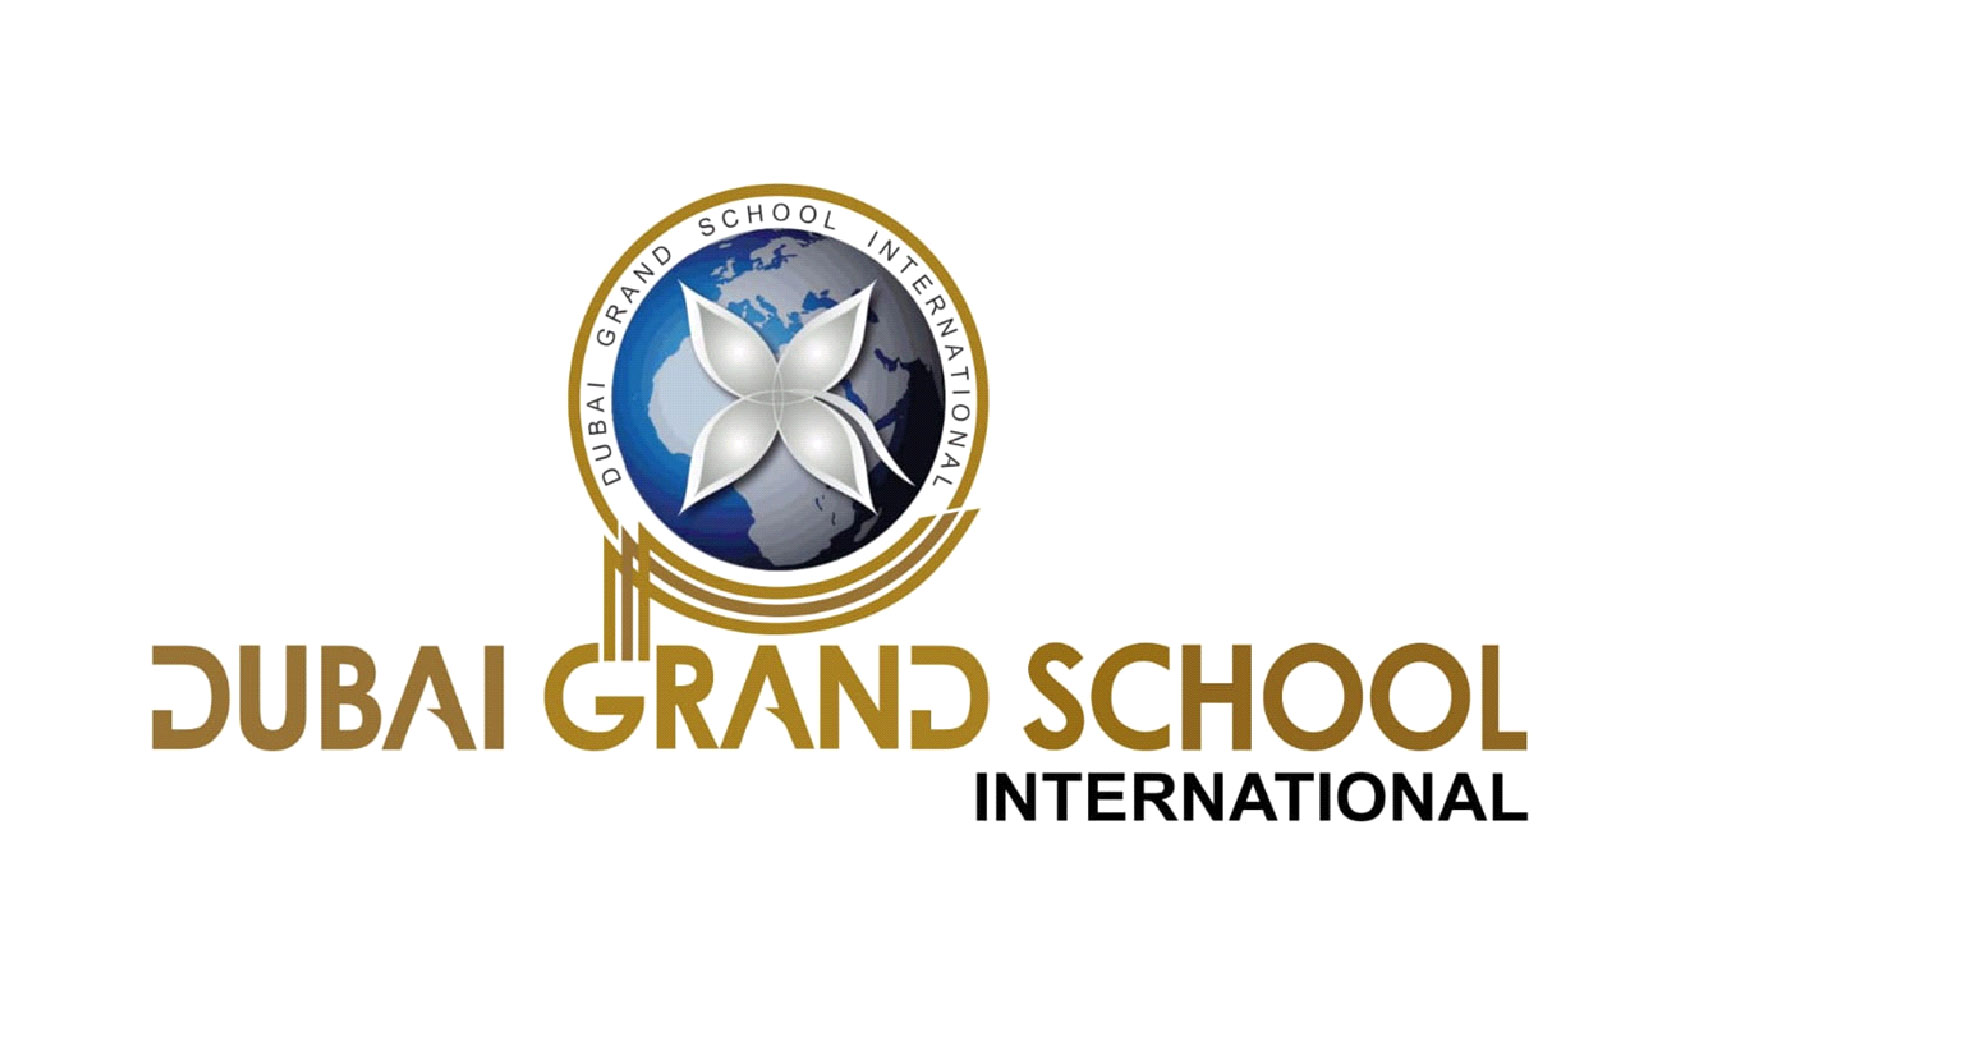 Dubai Grand School International|Schools|Education